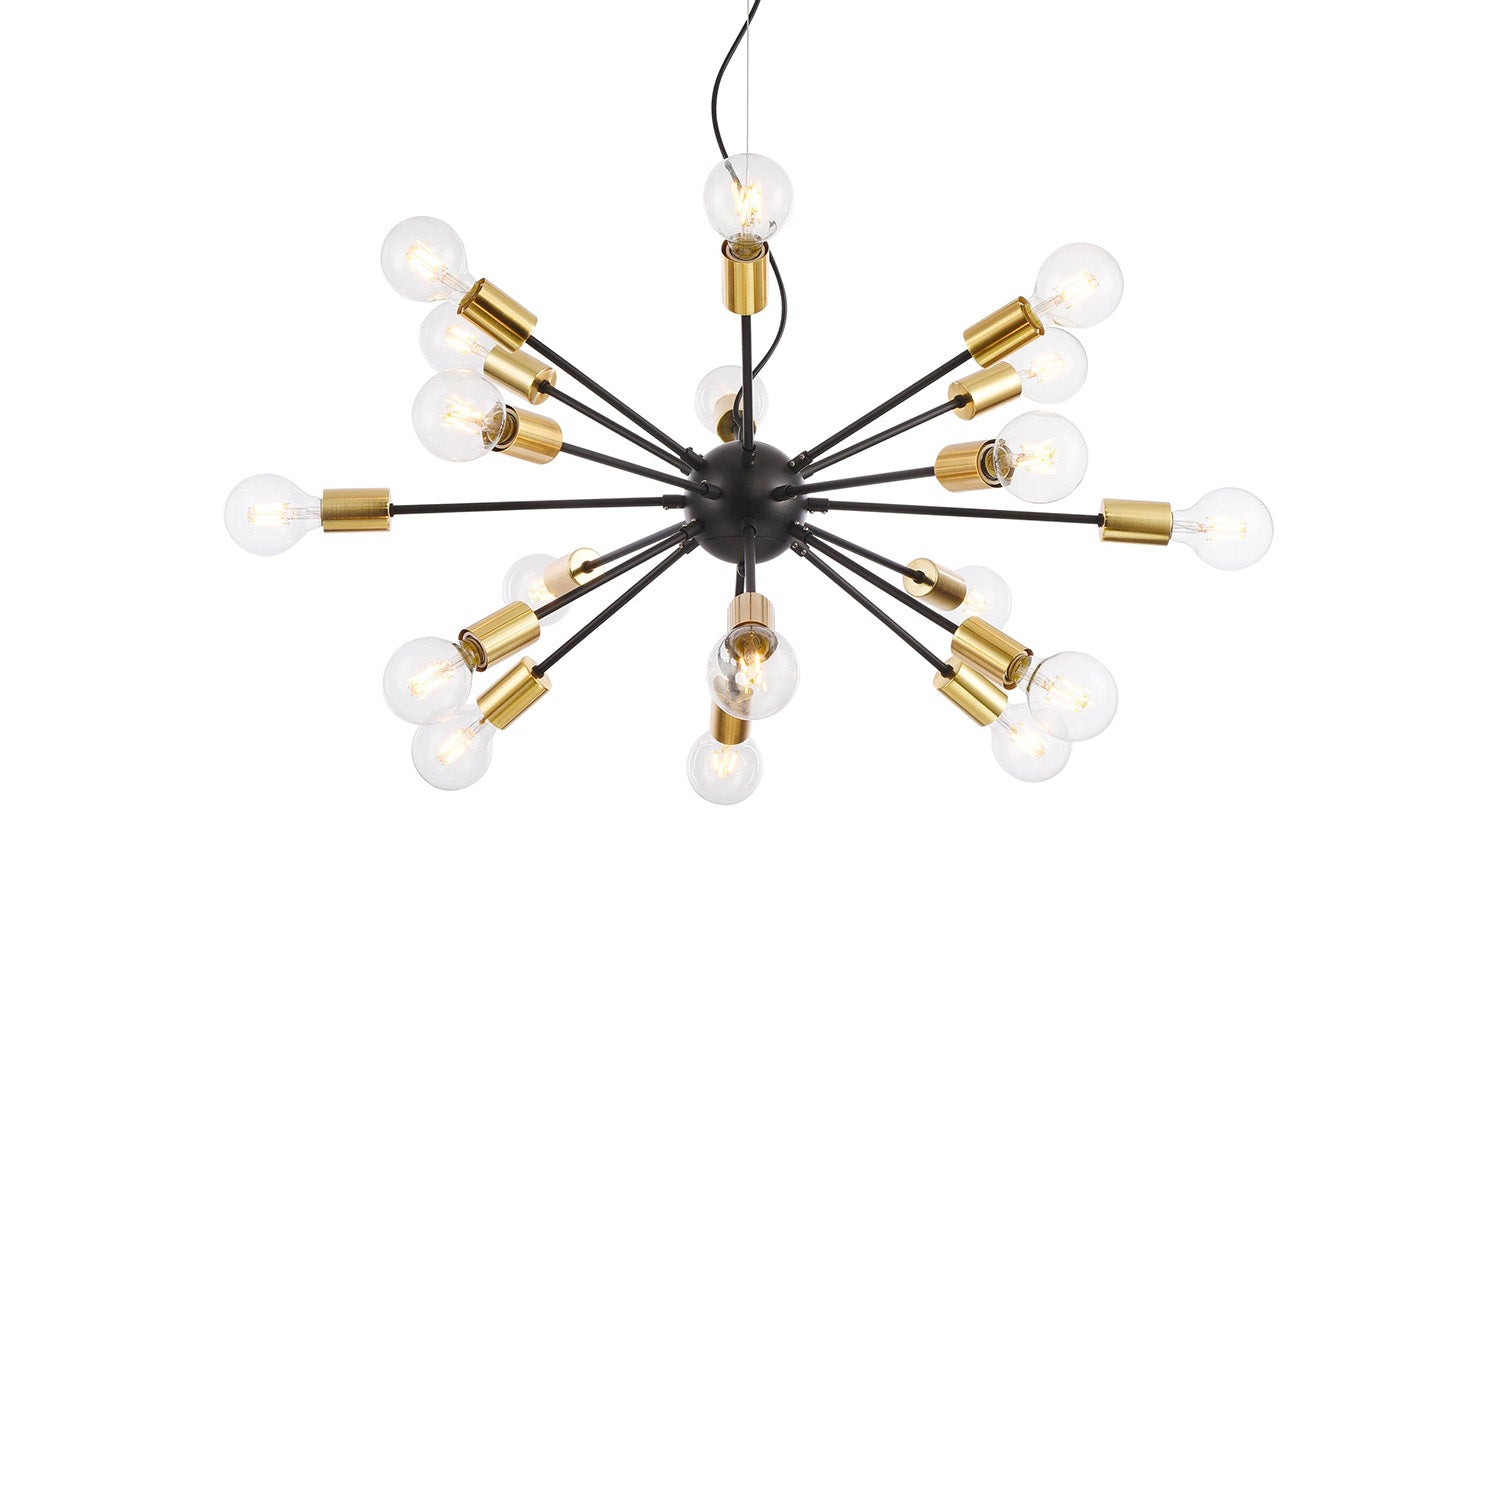 JACKSON - Gold atom pendant lamp for dining room